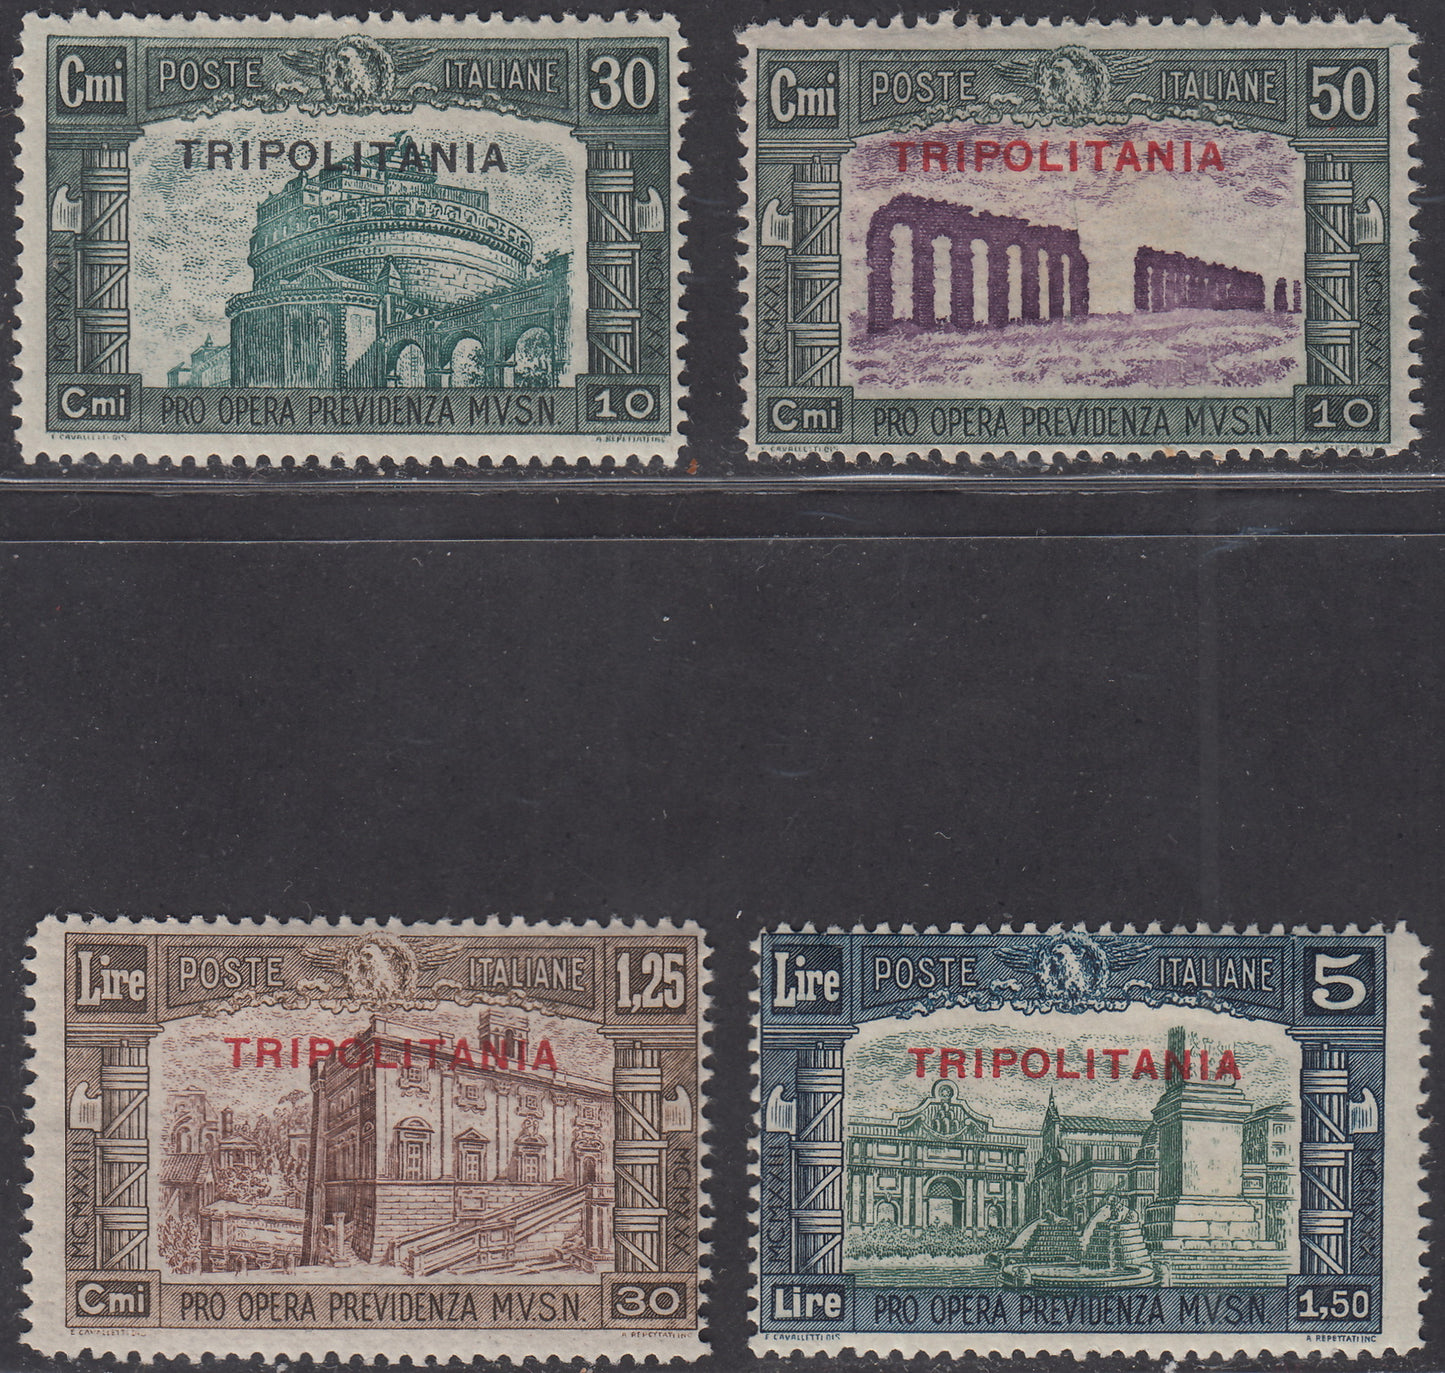 Trip21 - 1930 - Tripolitania Milizia III issue complete set of four new values ​​with original rubber (69/72)